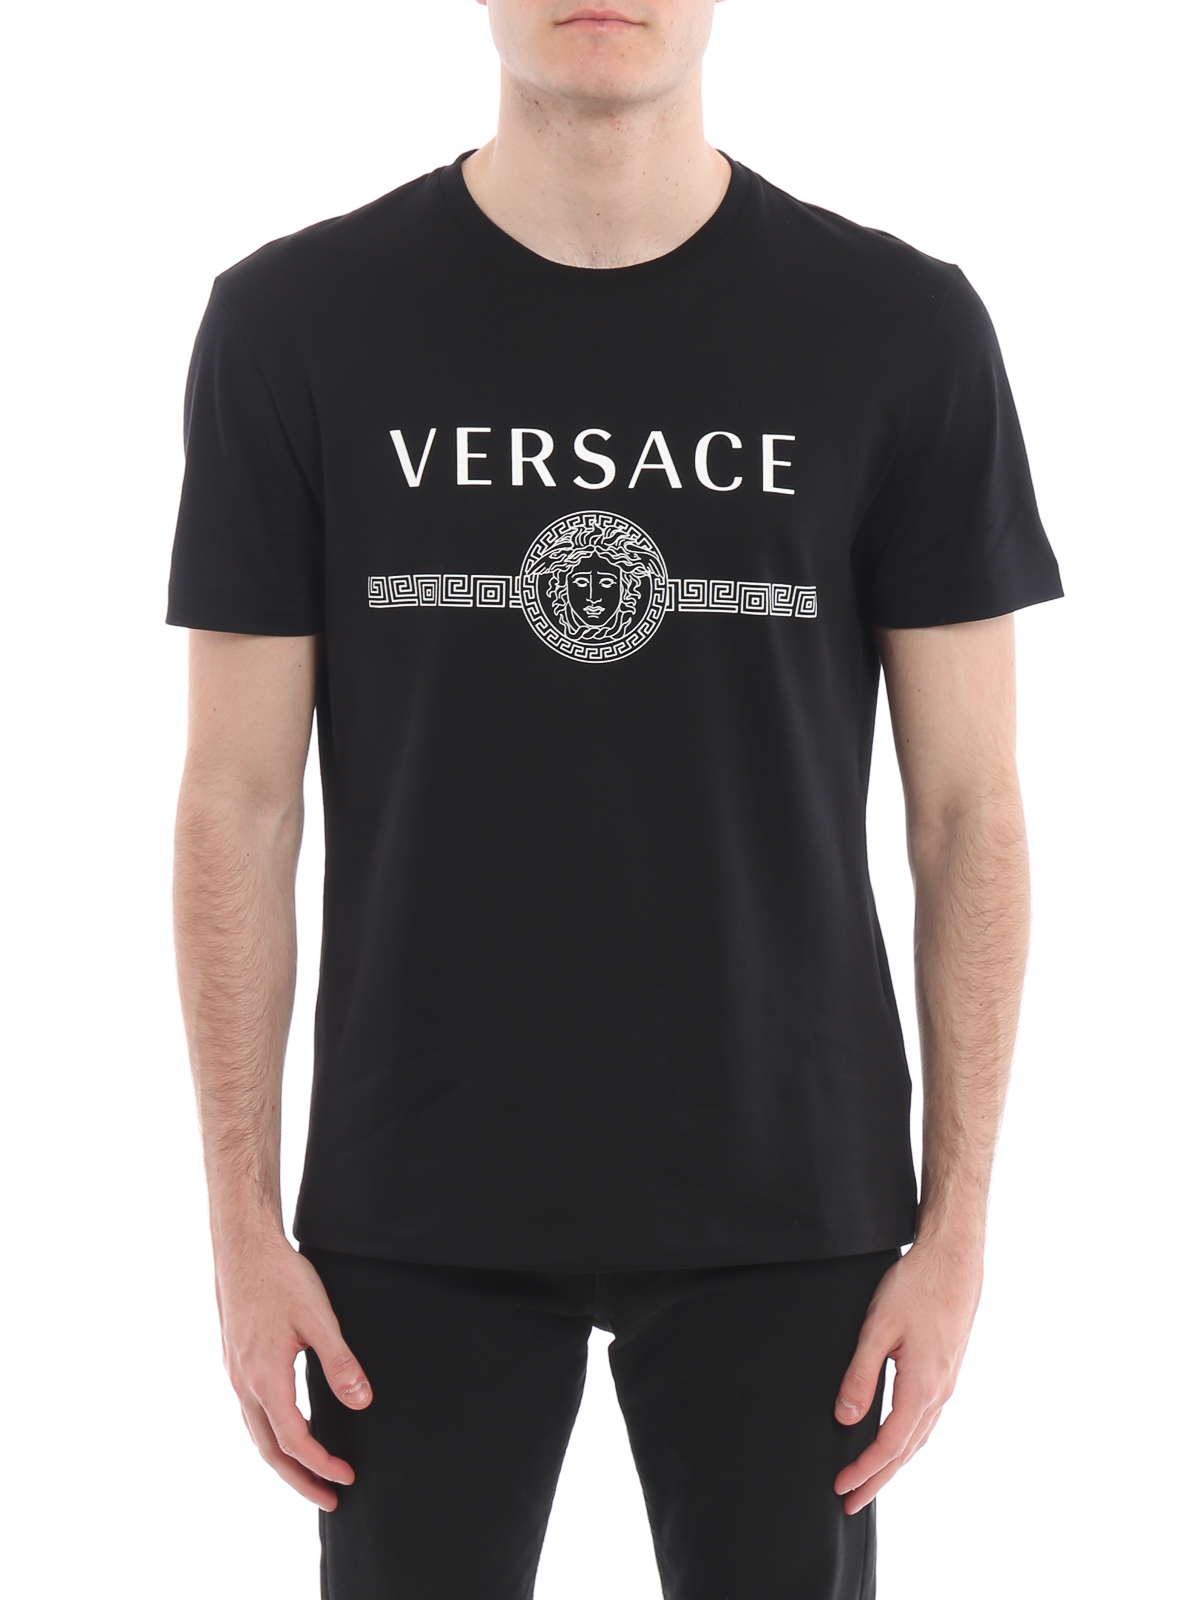 Versace - Medusa Head and logo print 